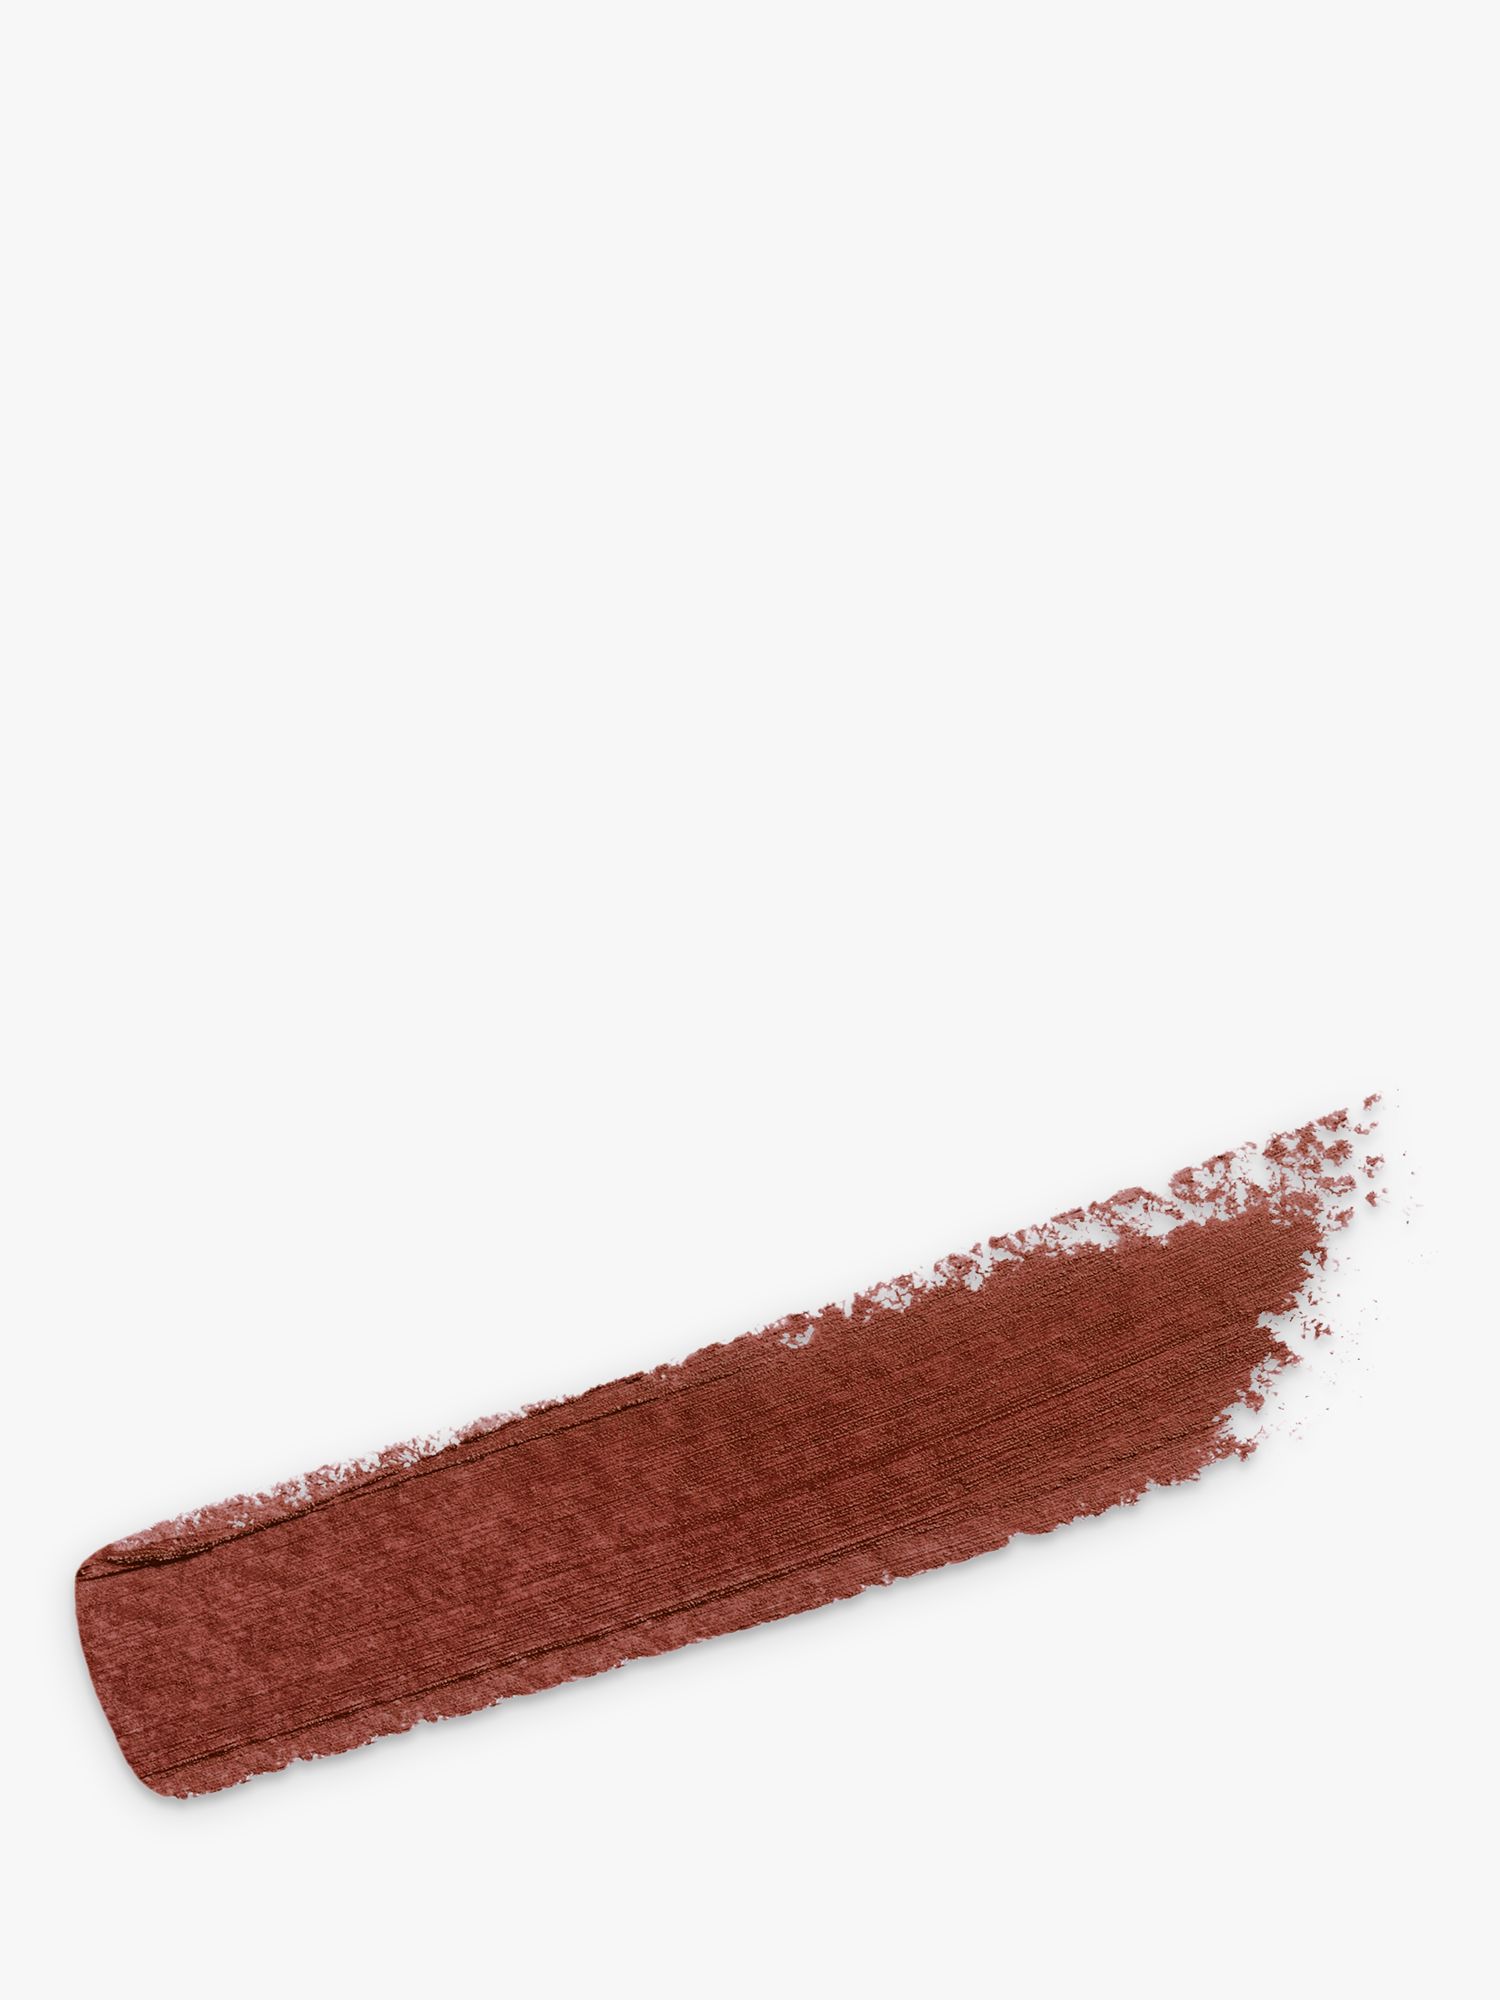 Sisley-Paris Le Phyto Rouge Lipstick Limited Edition, 16 Beige Bejing 3